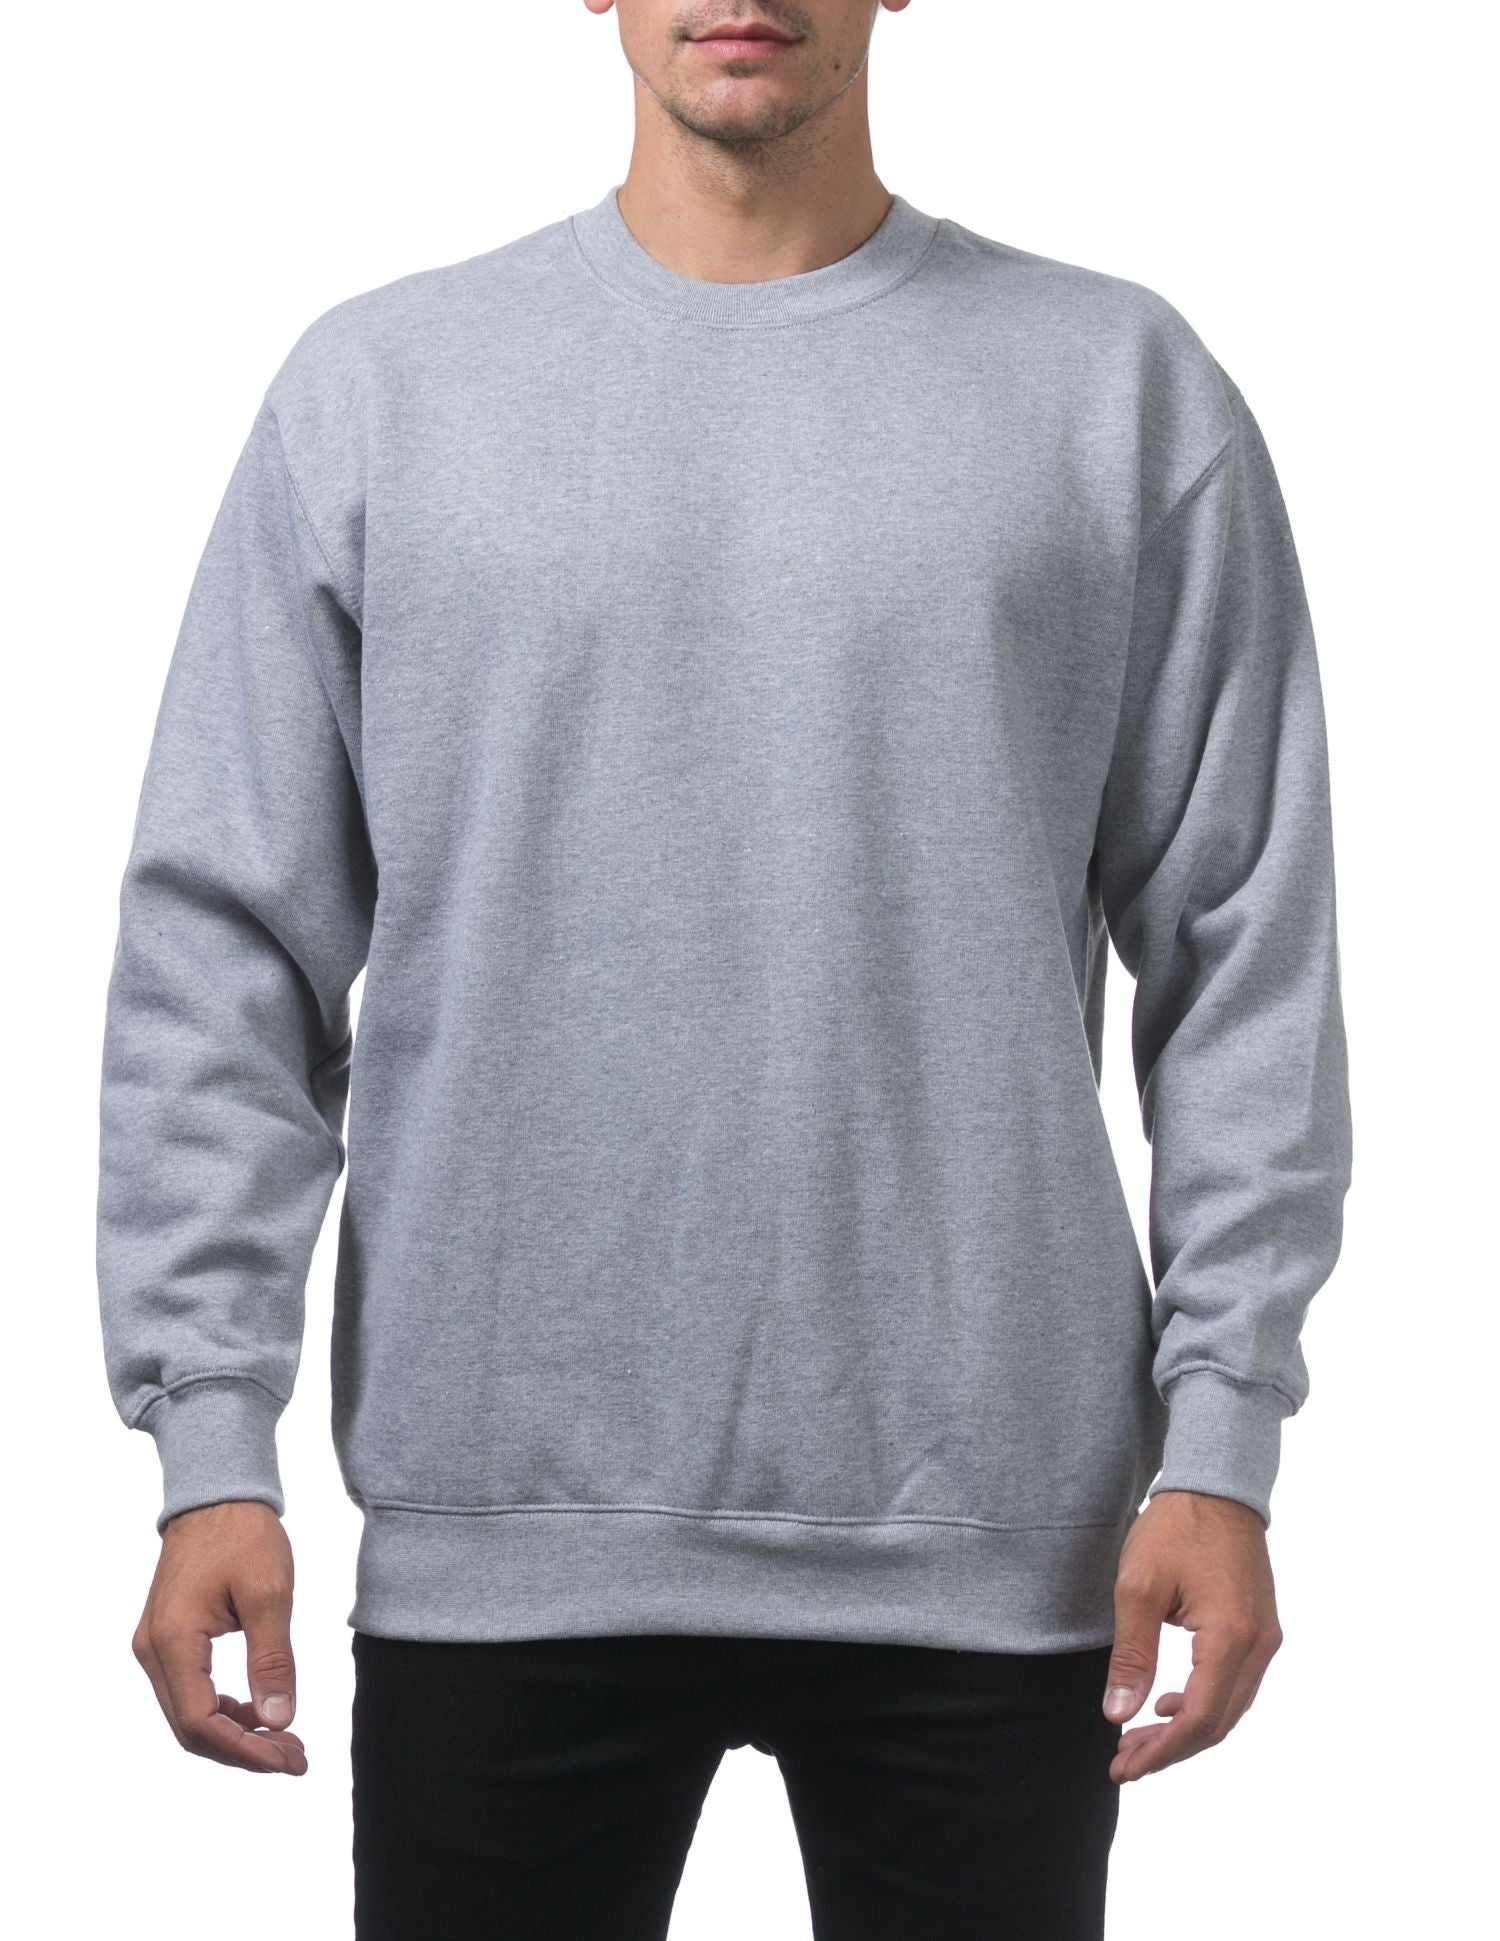 Pro Club Men's Comfort Crew Neck Fleece Pullover Sweater - Heather Gray - Medium - Pro-Distributing